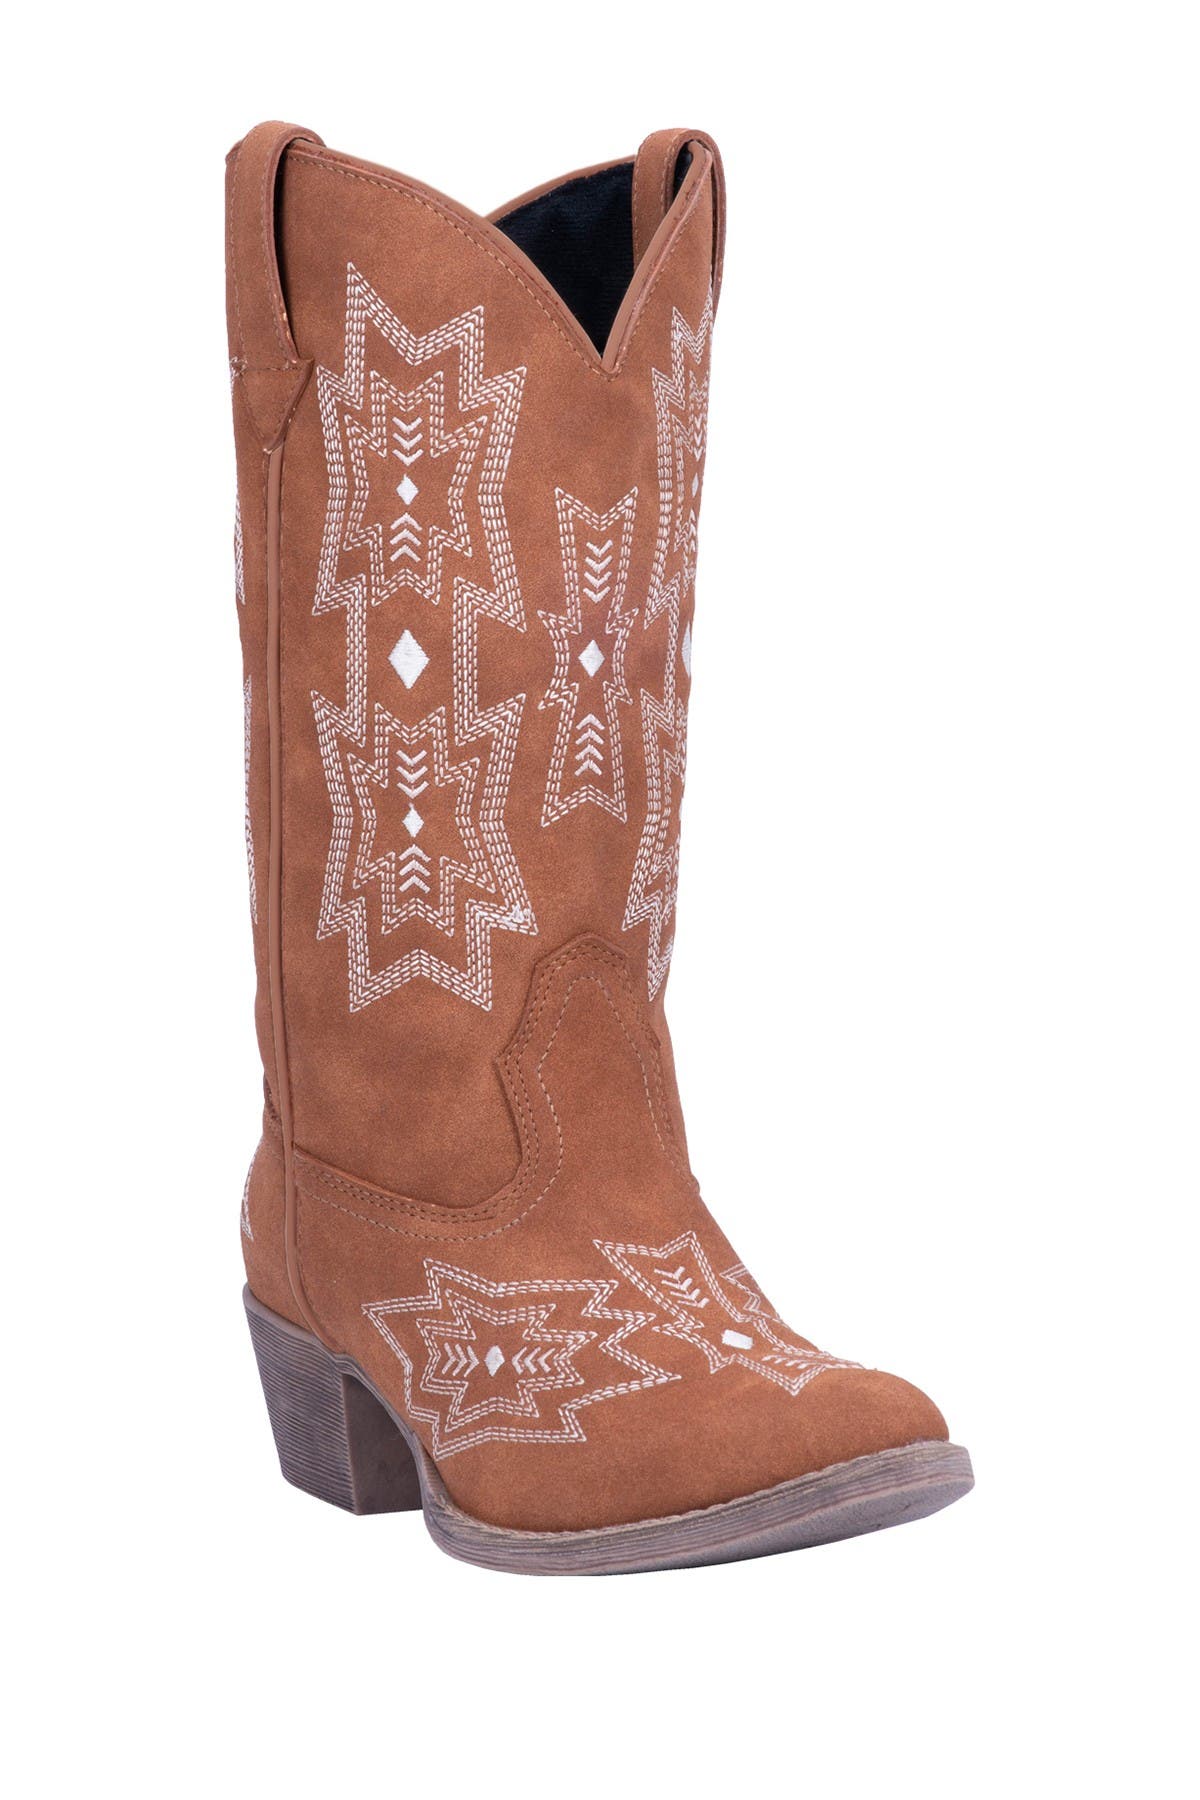 cowboy boots nordstrom rack